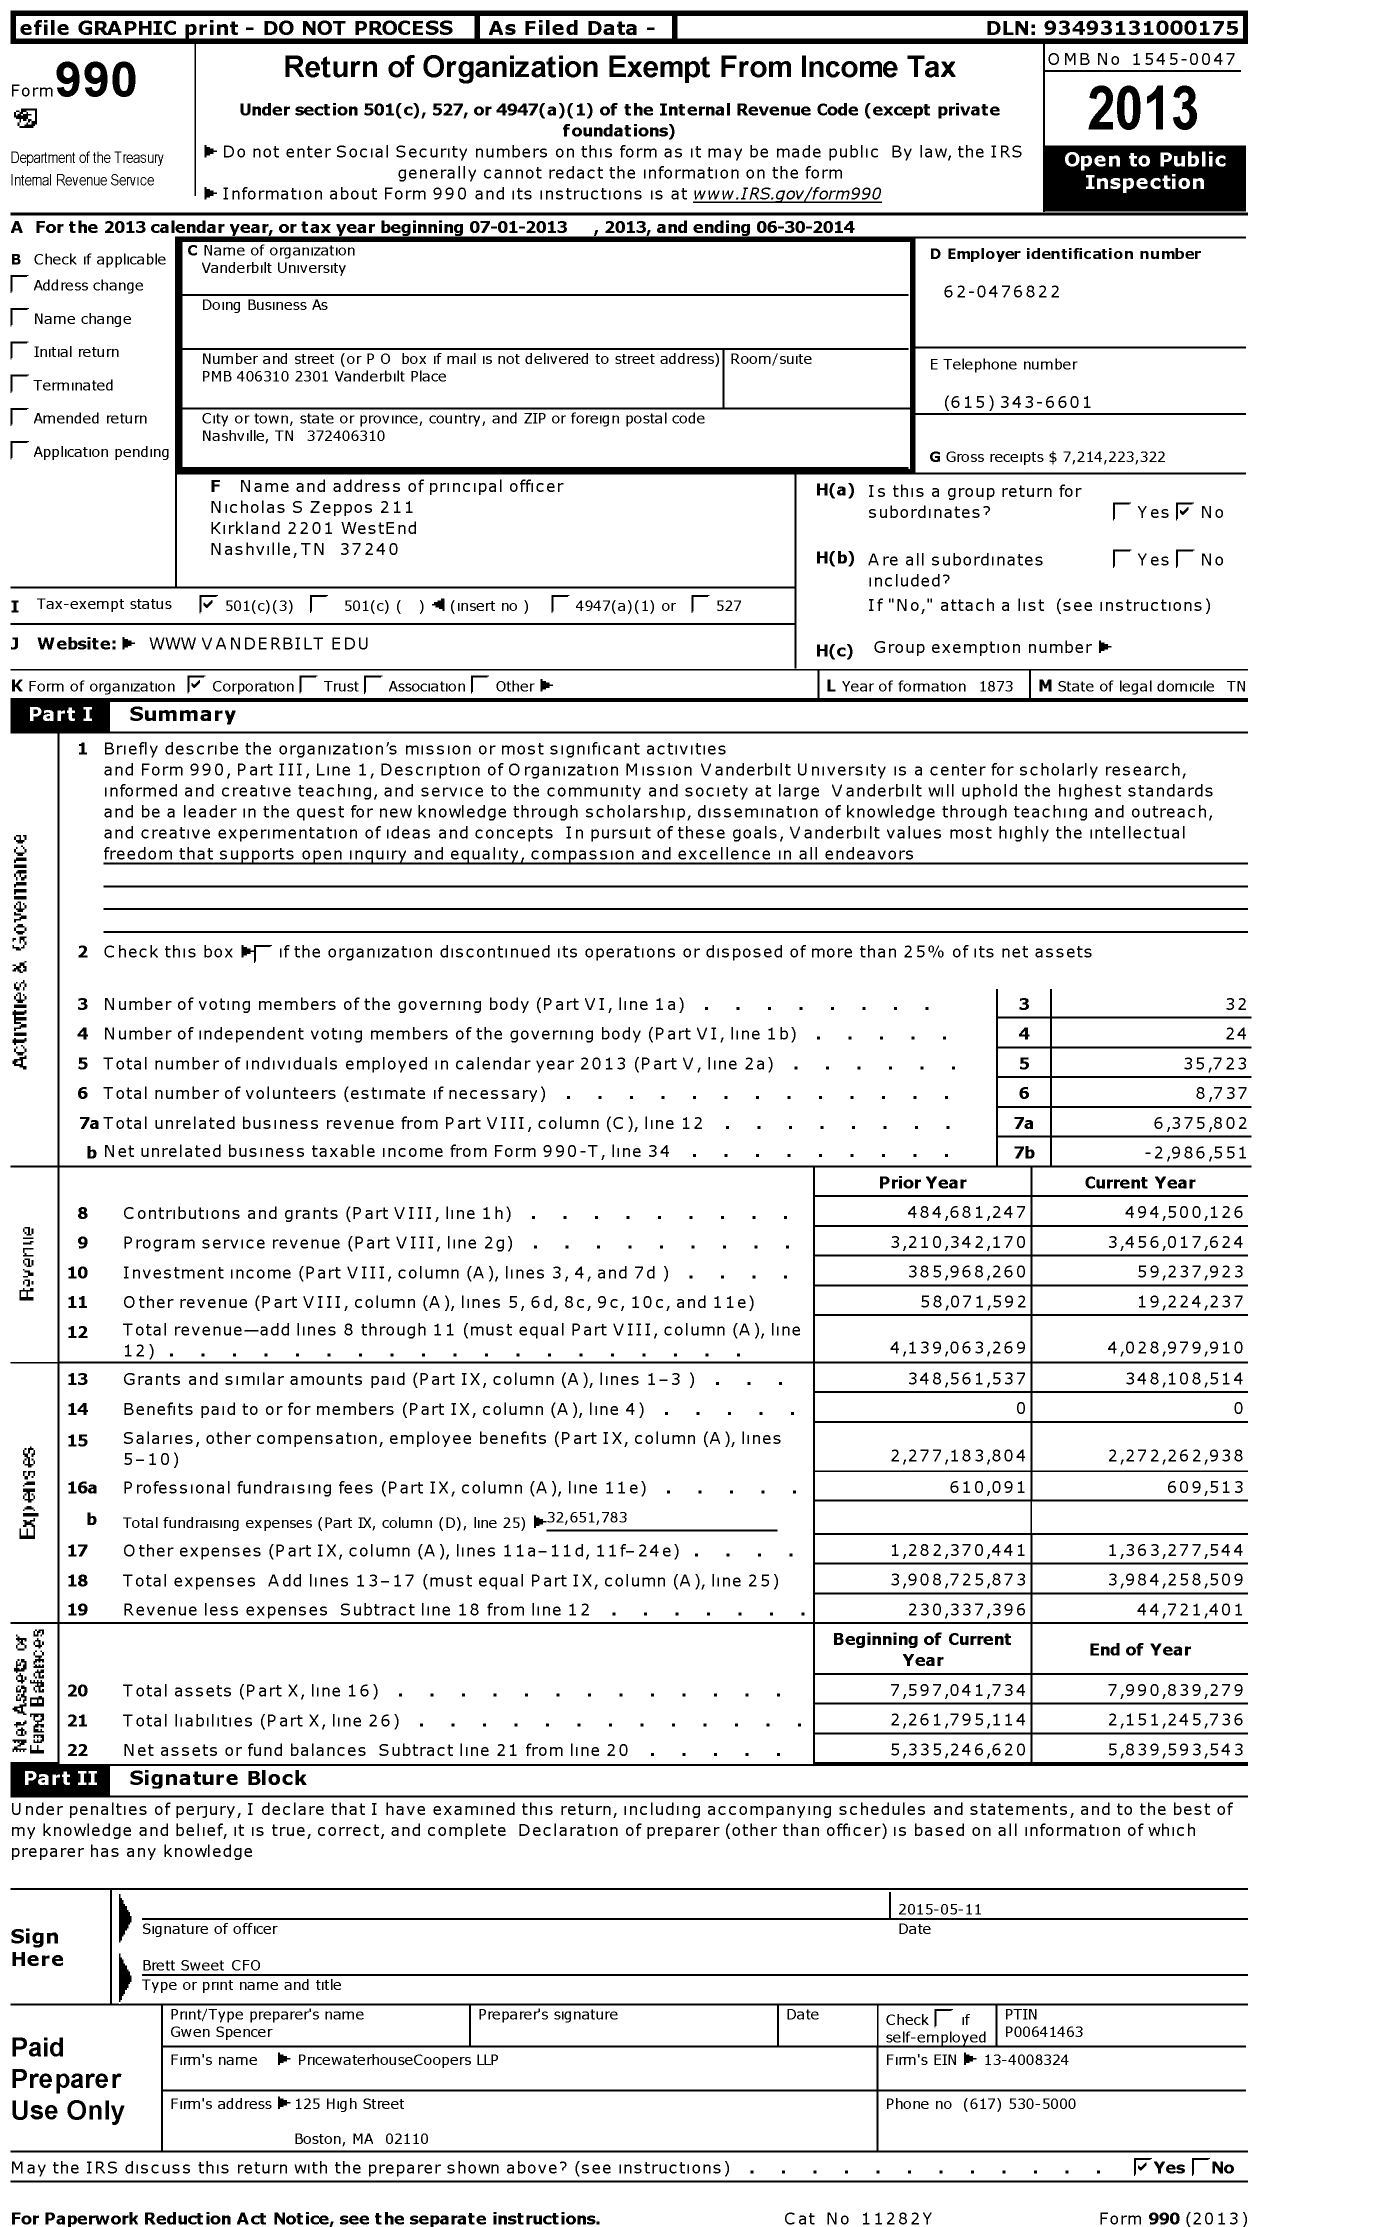 Image of first page of 2013 Form 990 for Vanderbilt University